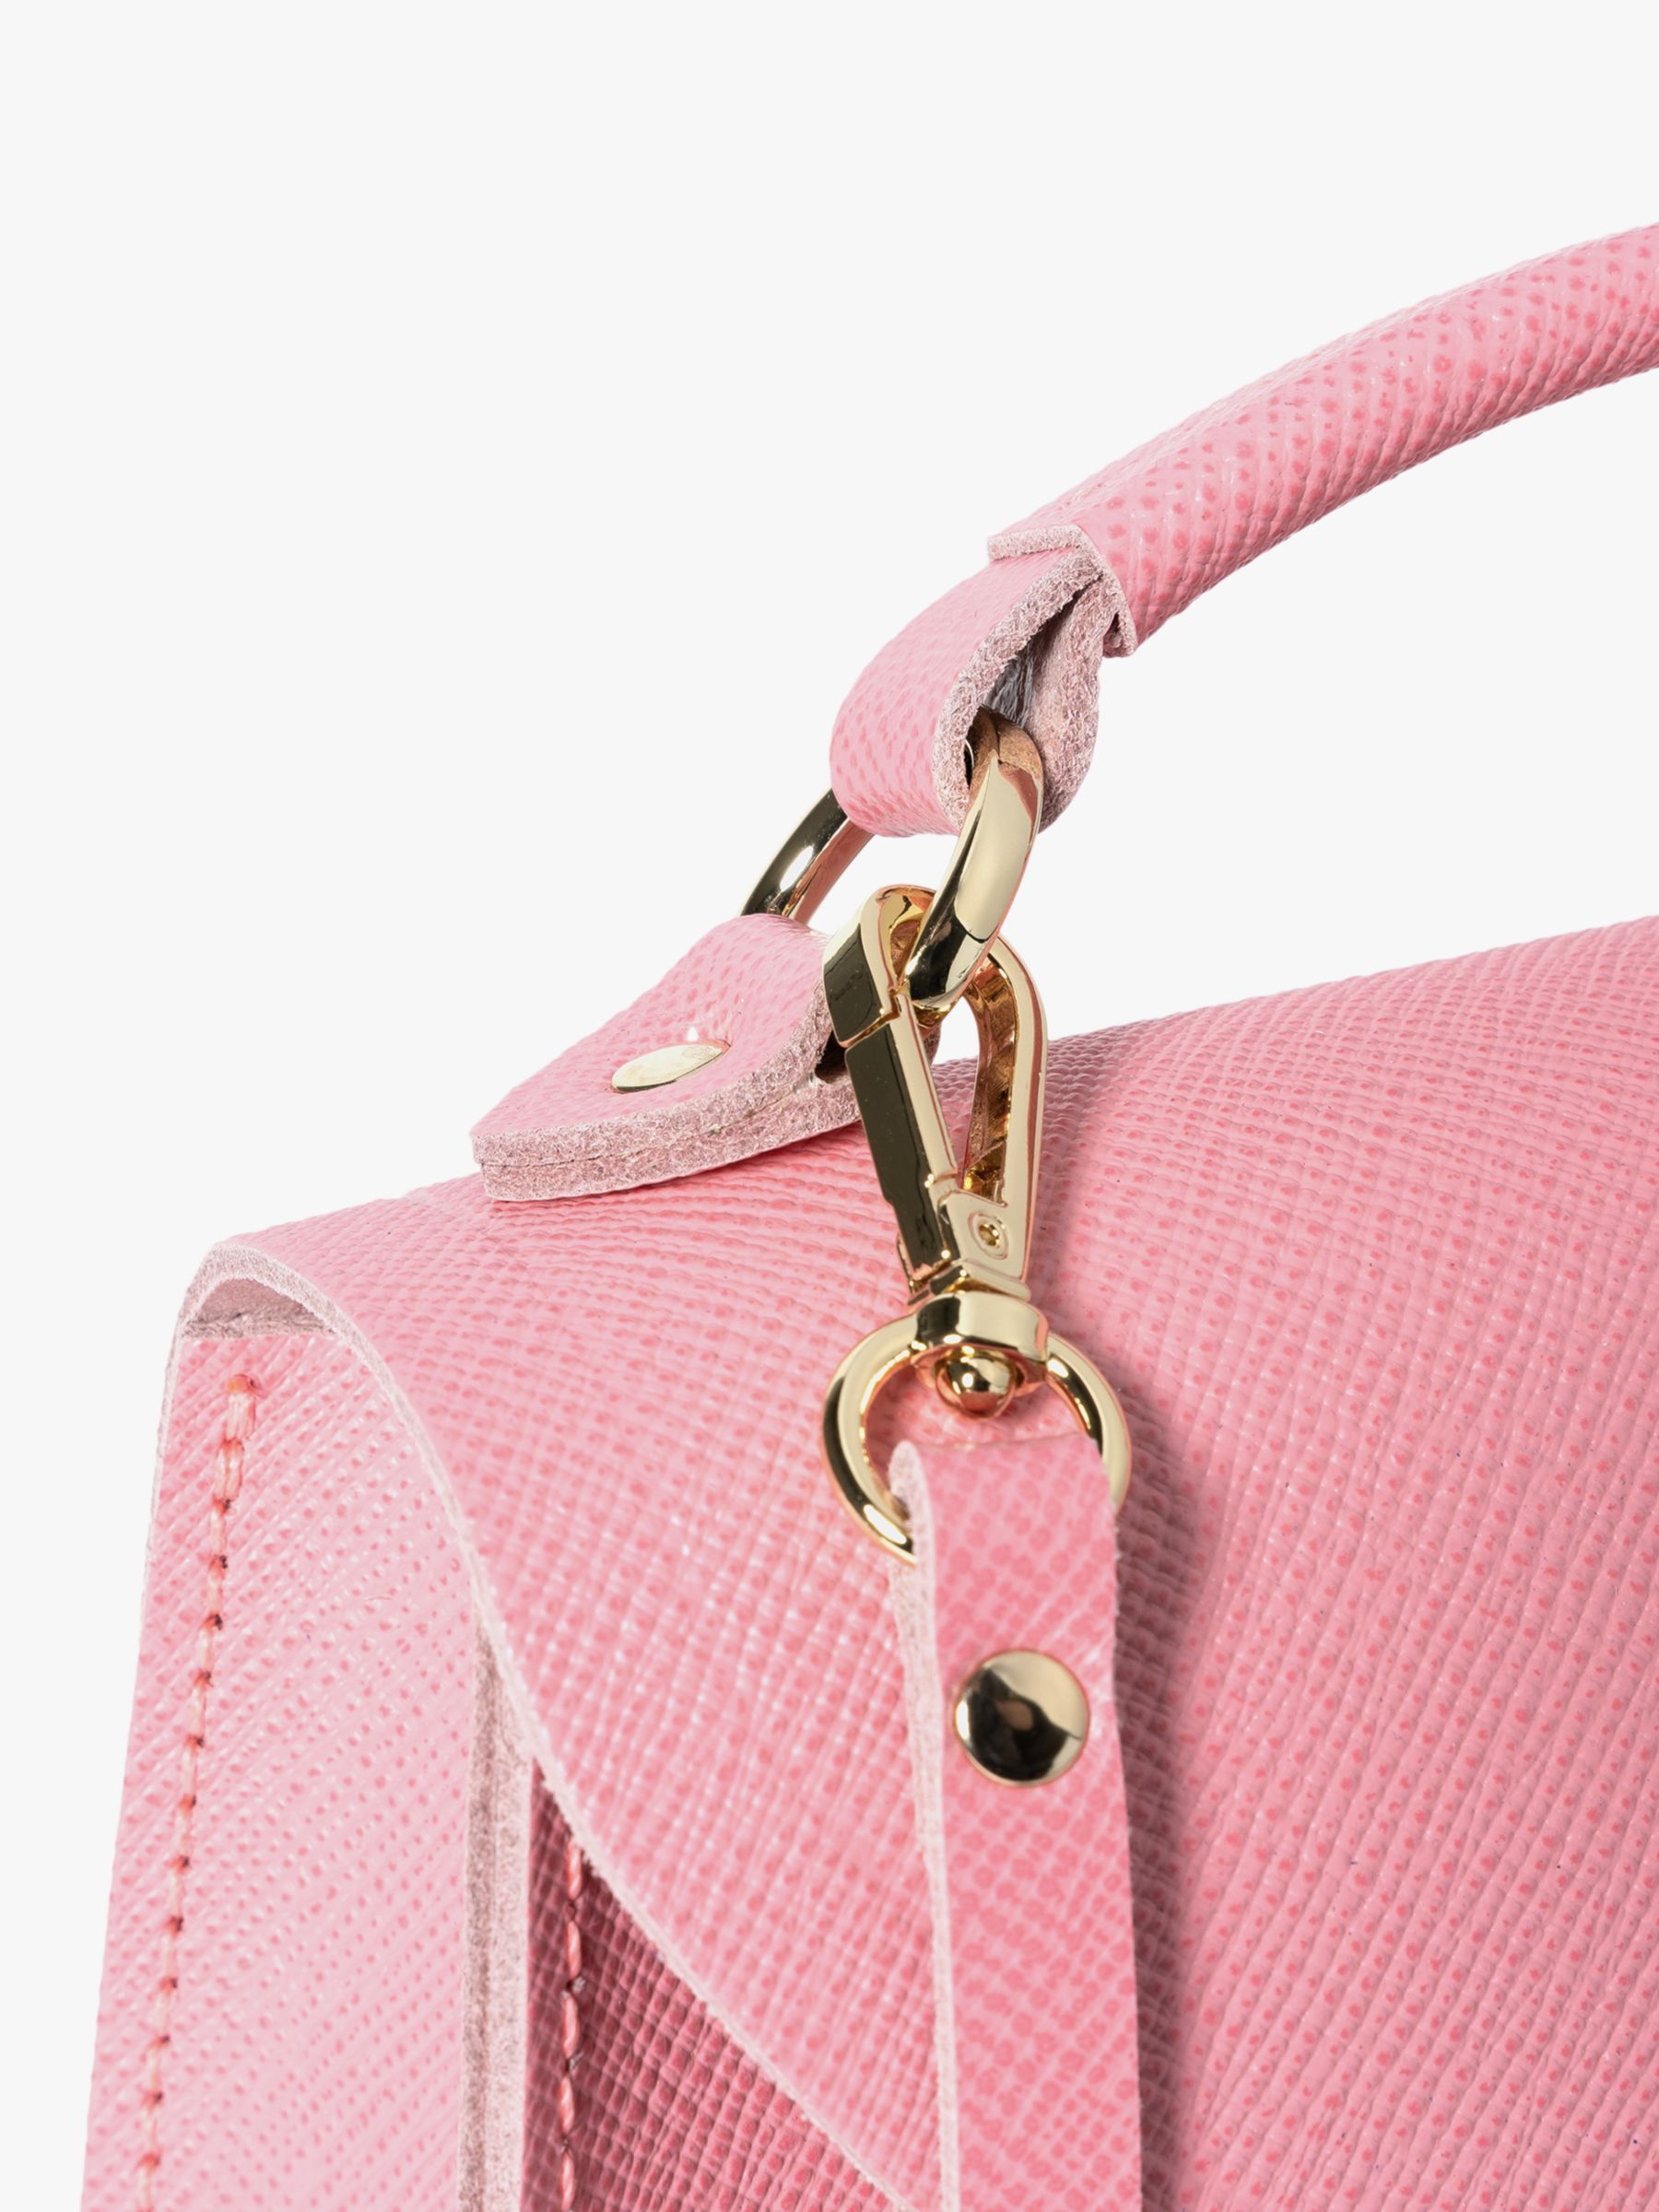 Cambridge Satchel The Mini Poppy Saffiano Leather Shoulder Bag, Salmon Pink